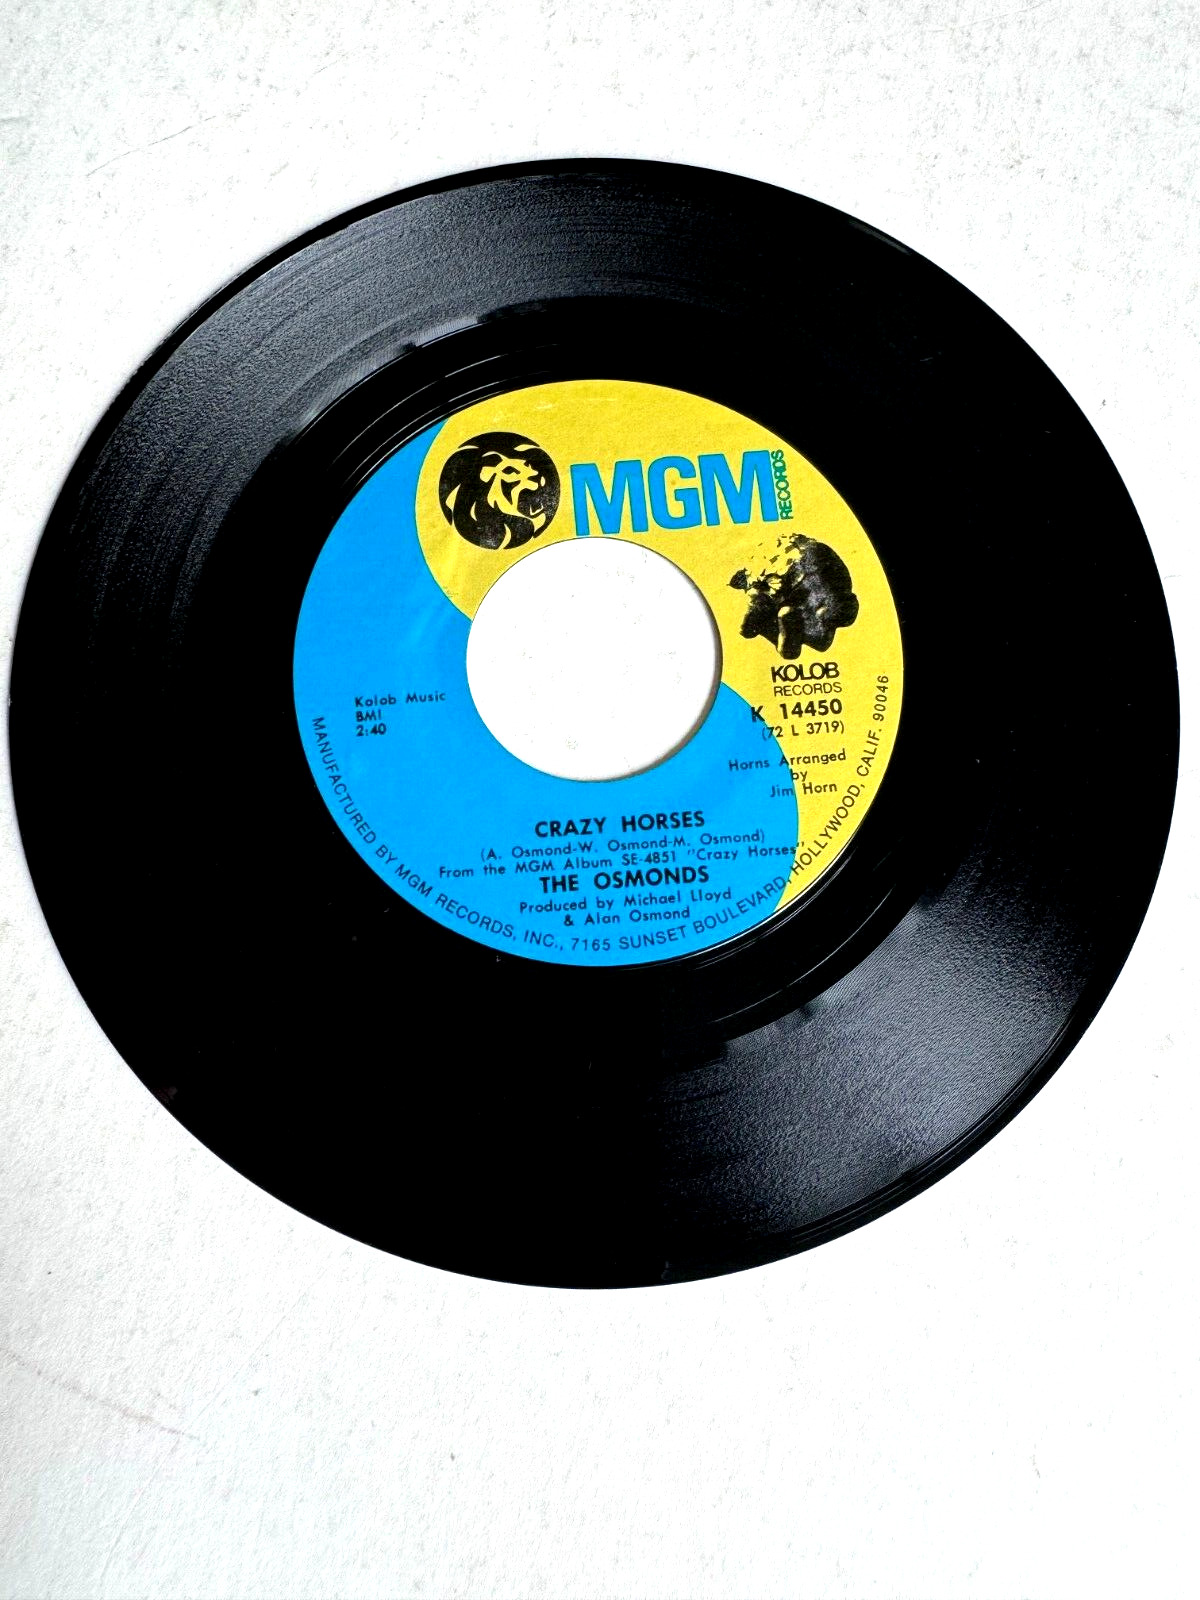 Vintage 45 RPM The Osmonds \